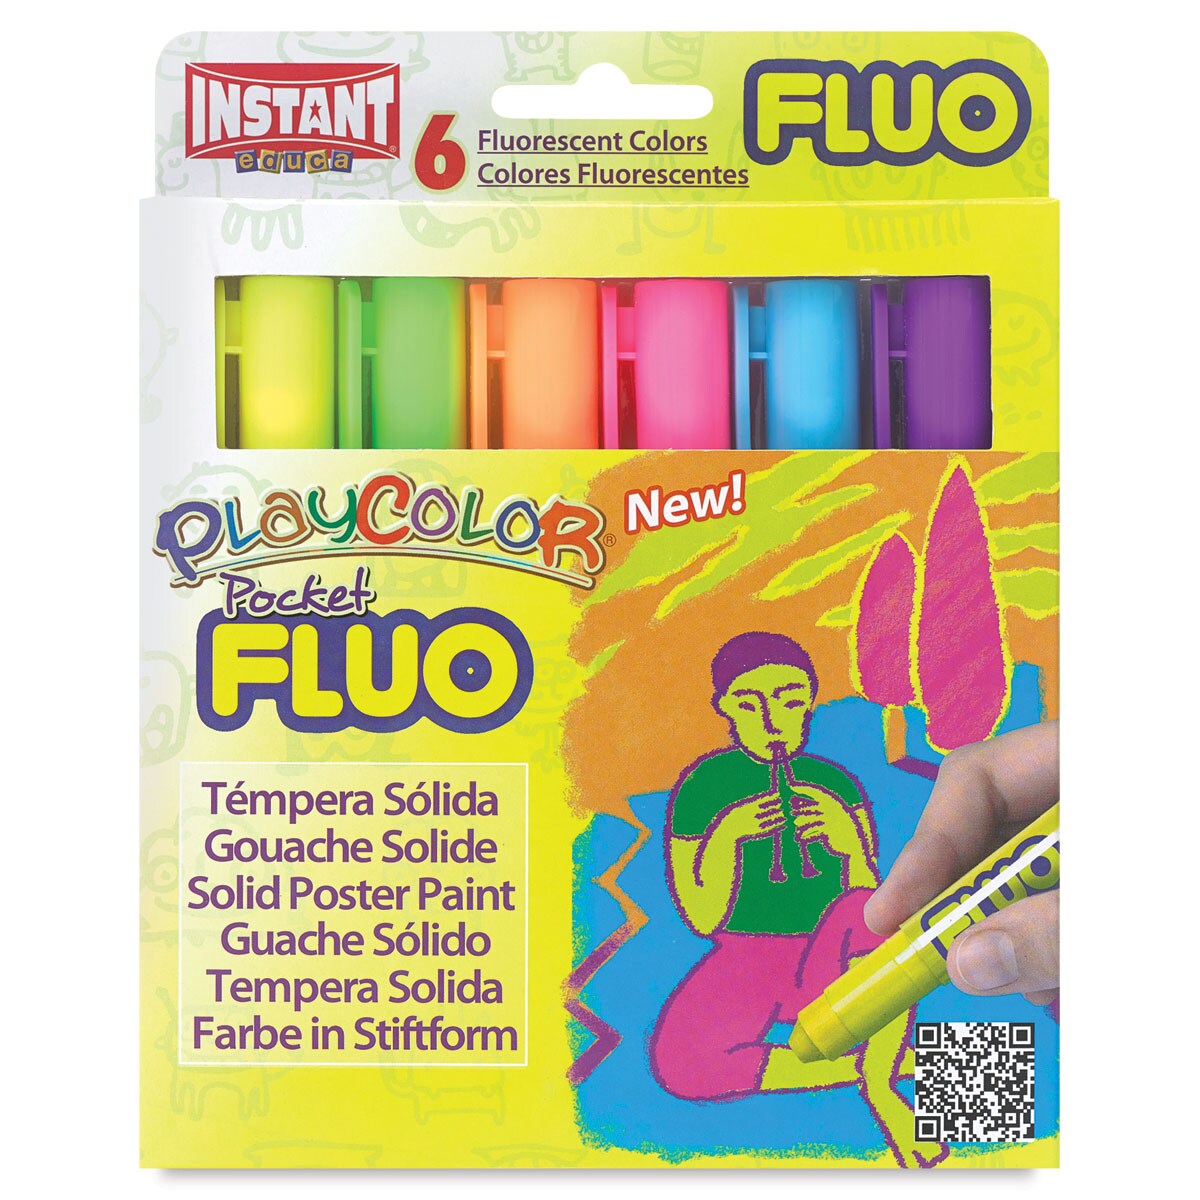 Playcolor - Florescent Colors, Set of 6, Pocket Sized